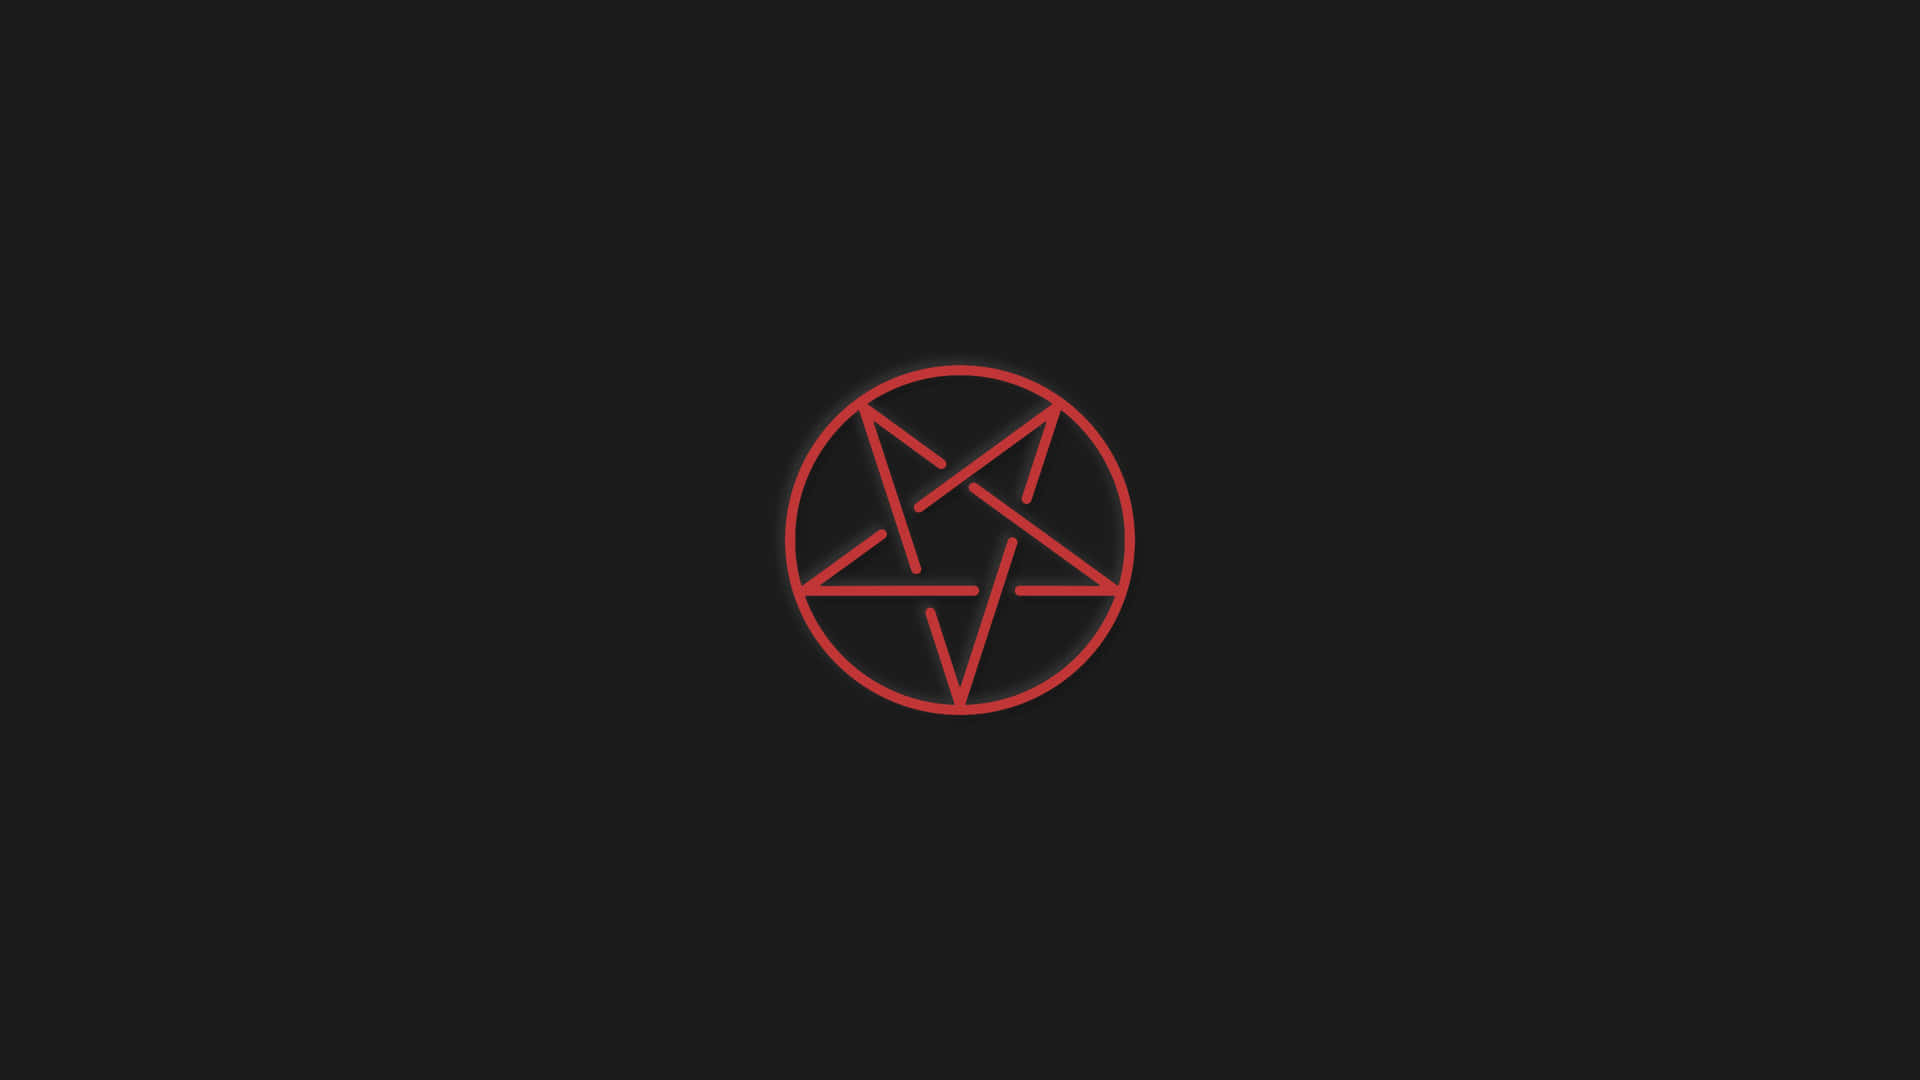 Red Pentagramon Black Background Background